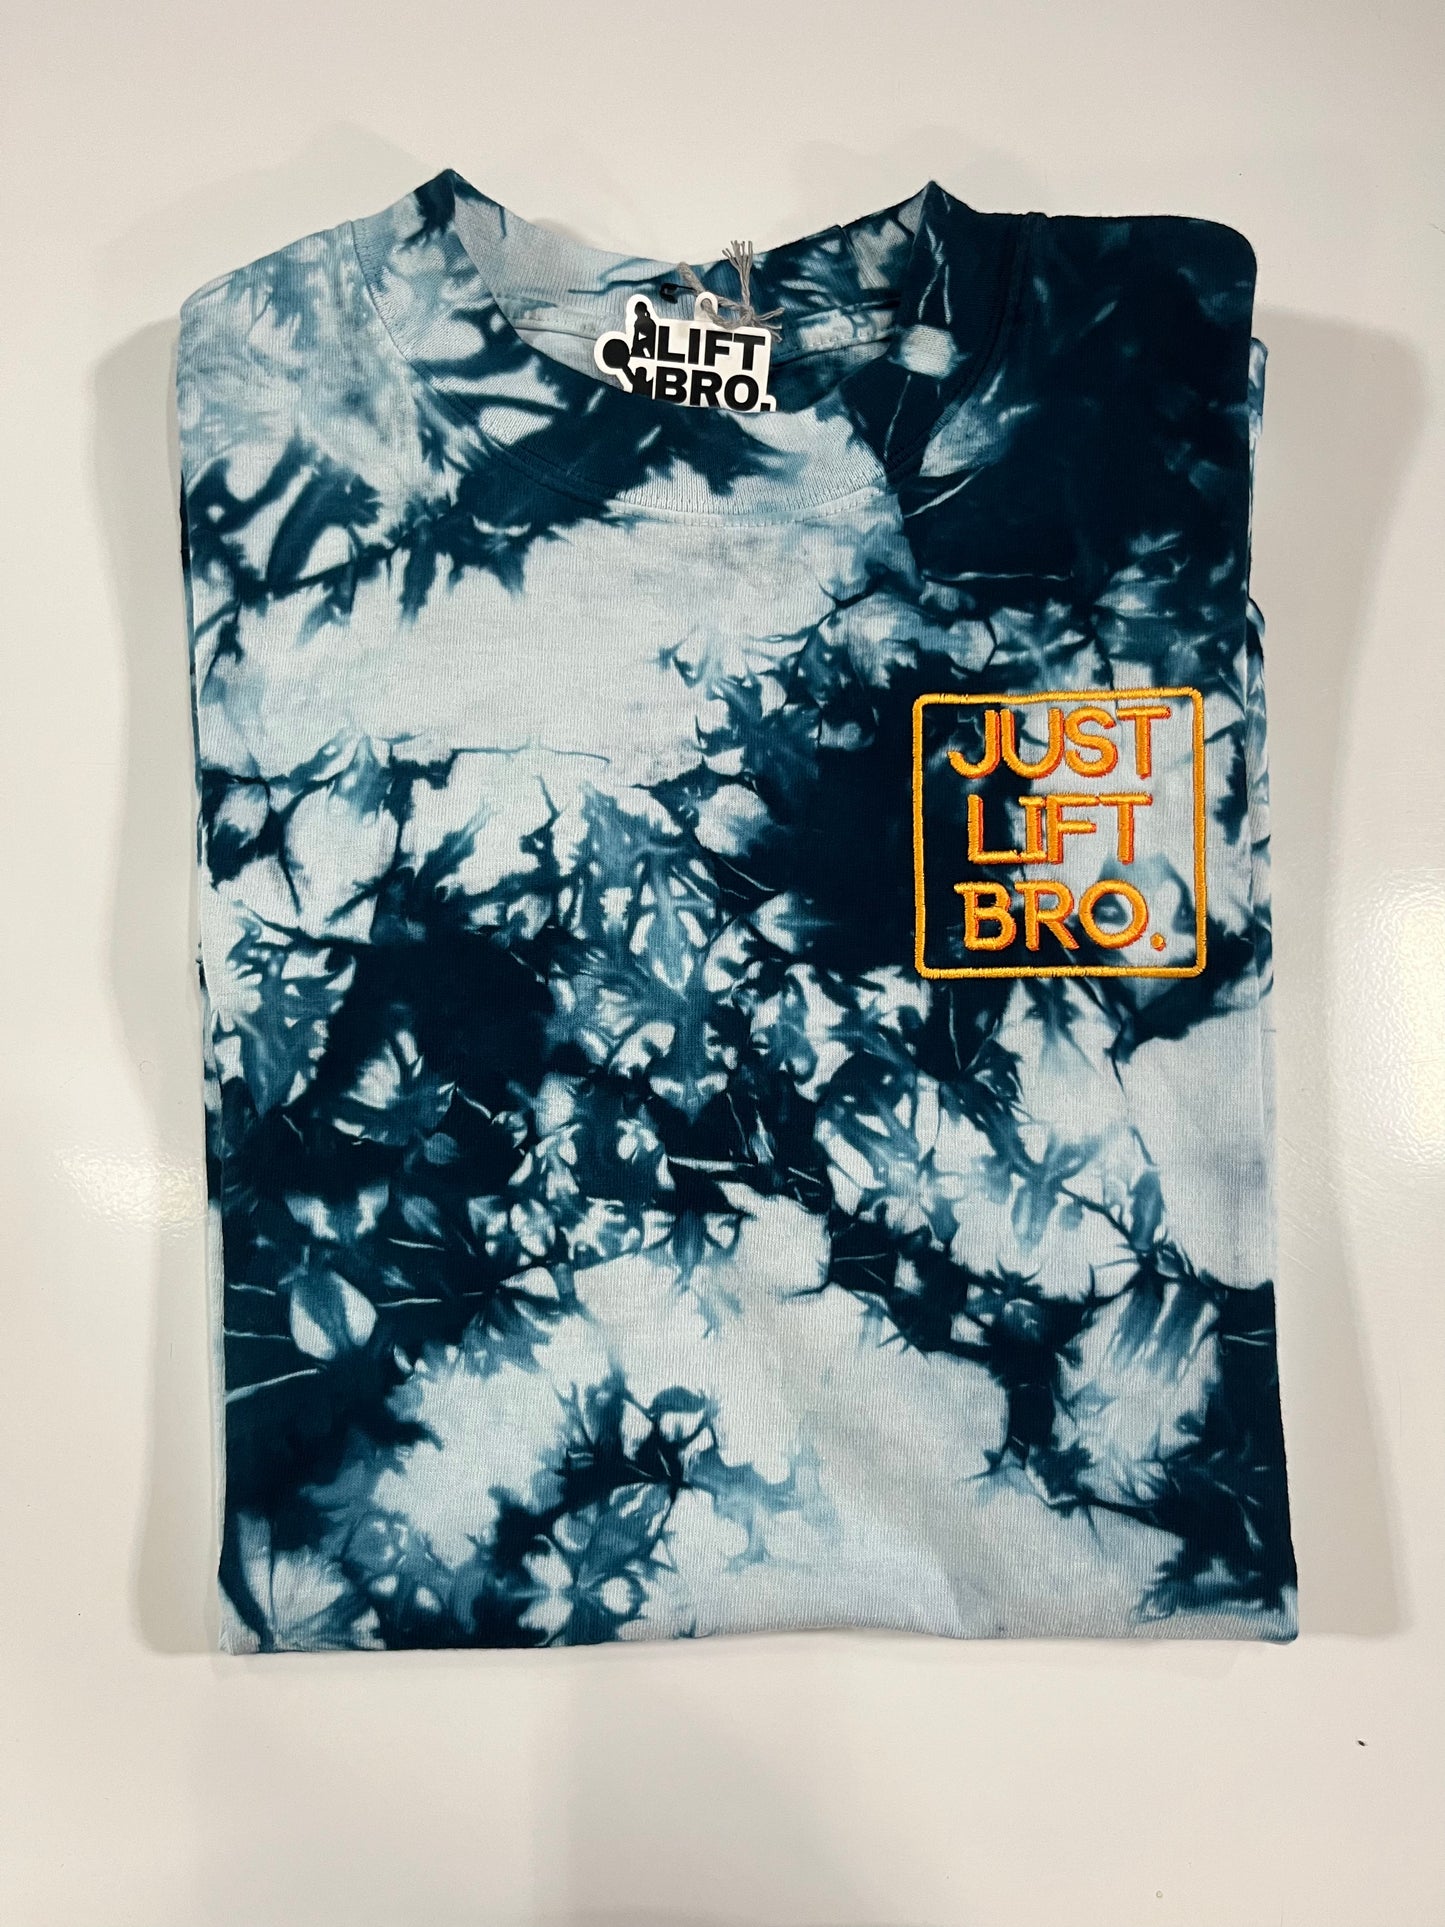 Just Lift Bro. Oversized Tie-Dye Tee